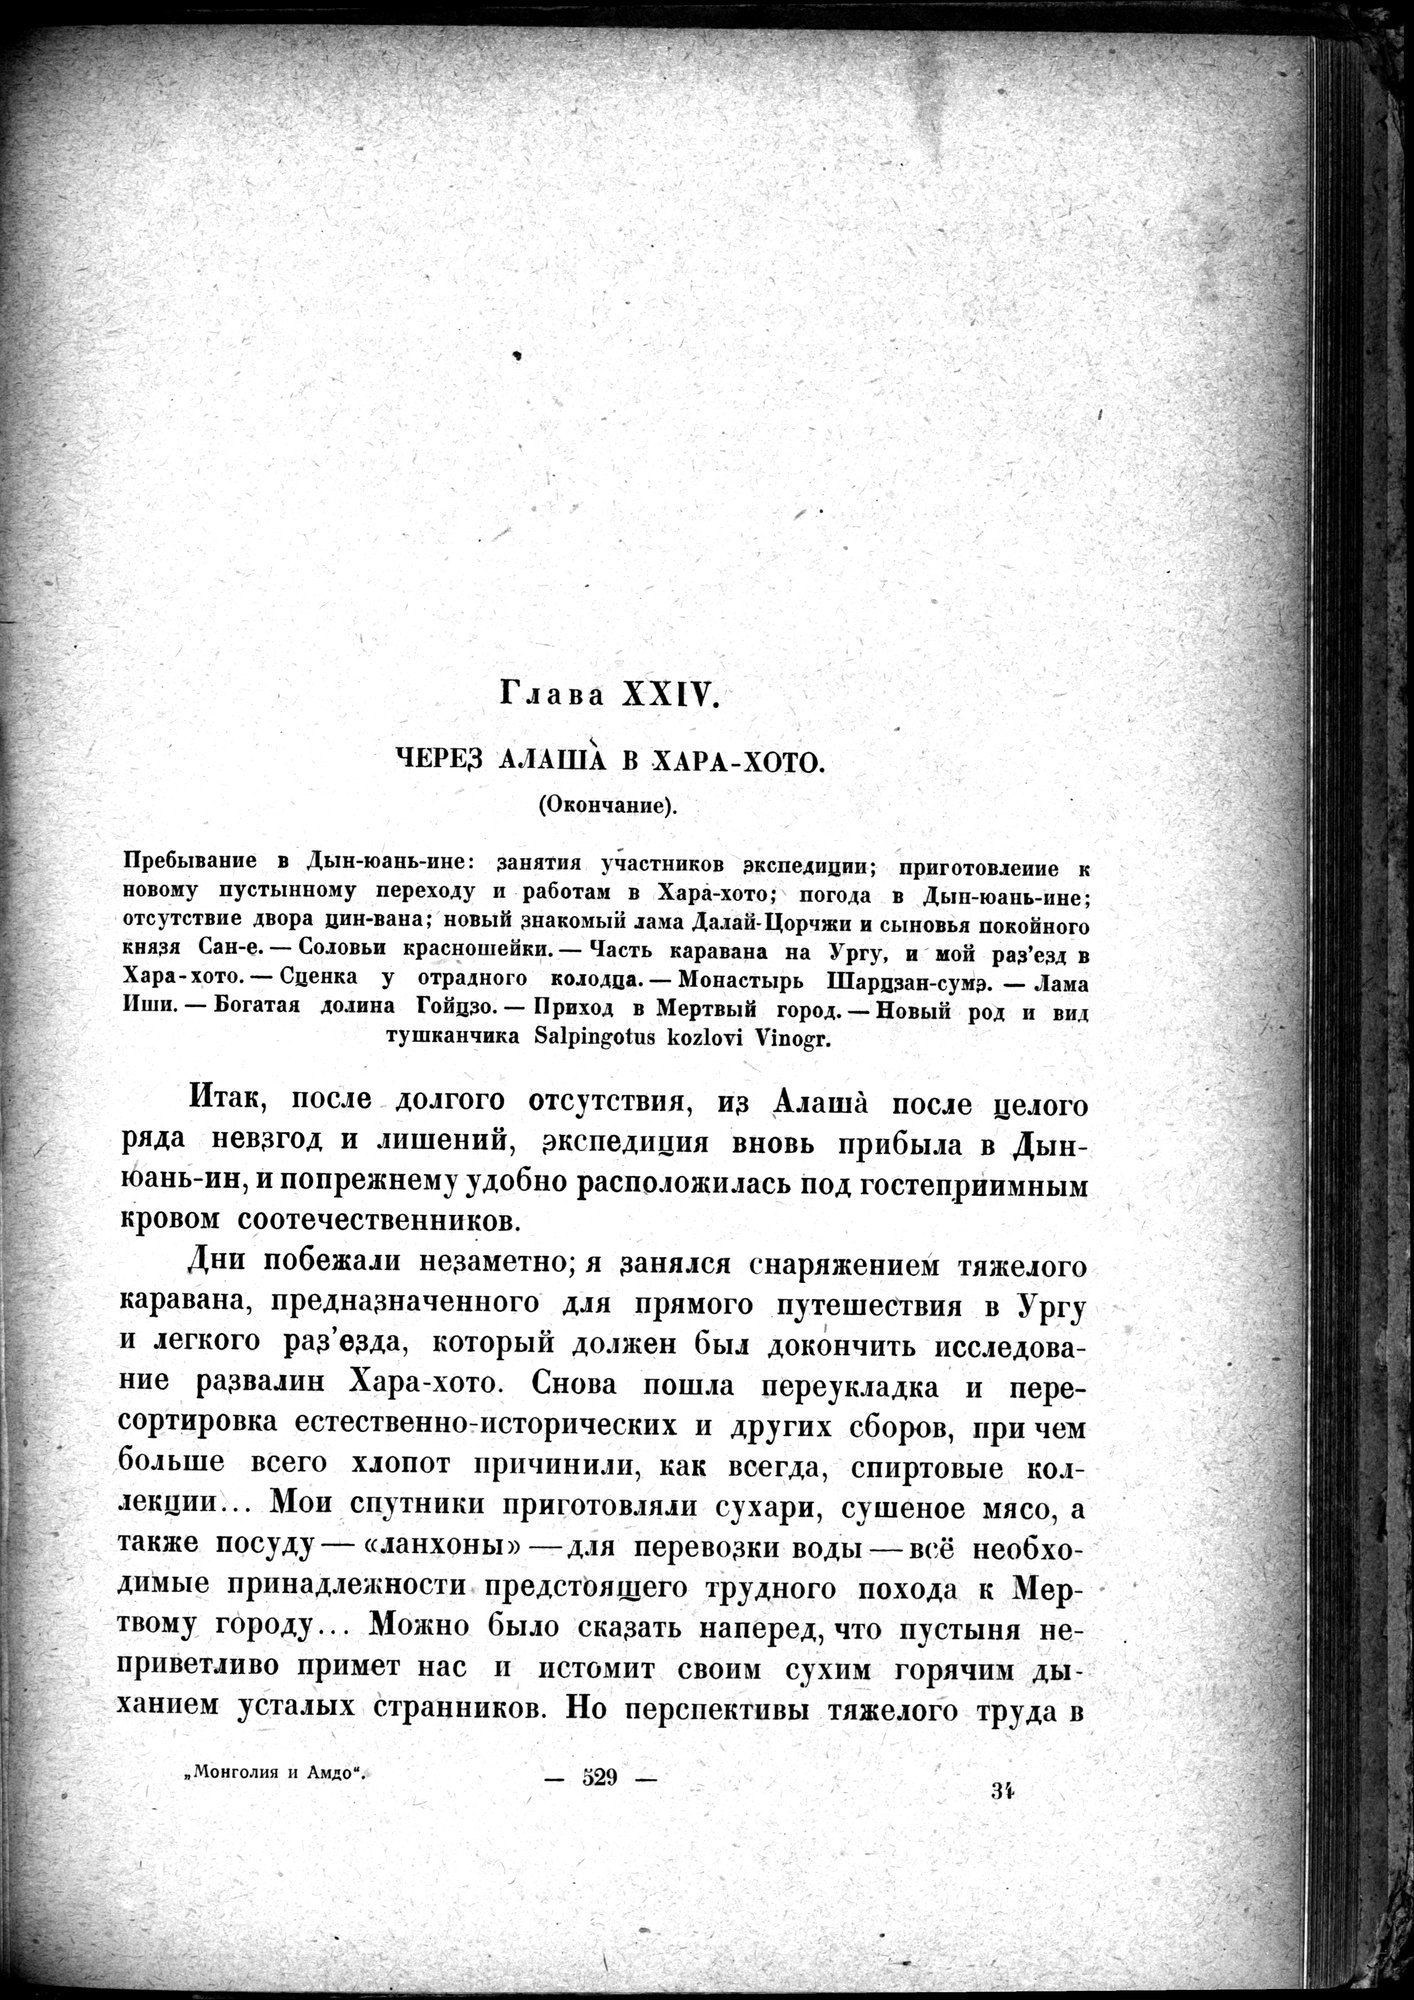 Mongoliya i Amdo i mertby gorod Khara-Khoto : vol.1 / Page 613 (Grayscale High Resolution Image)